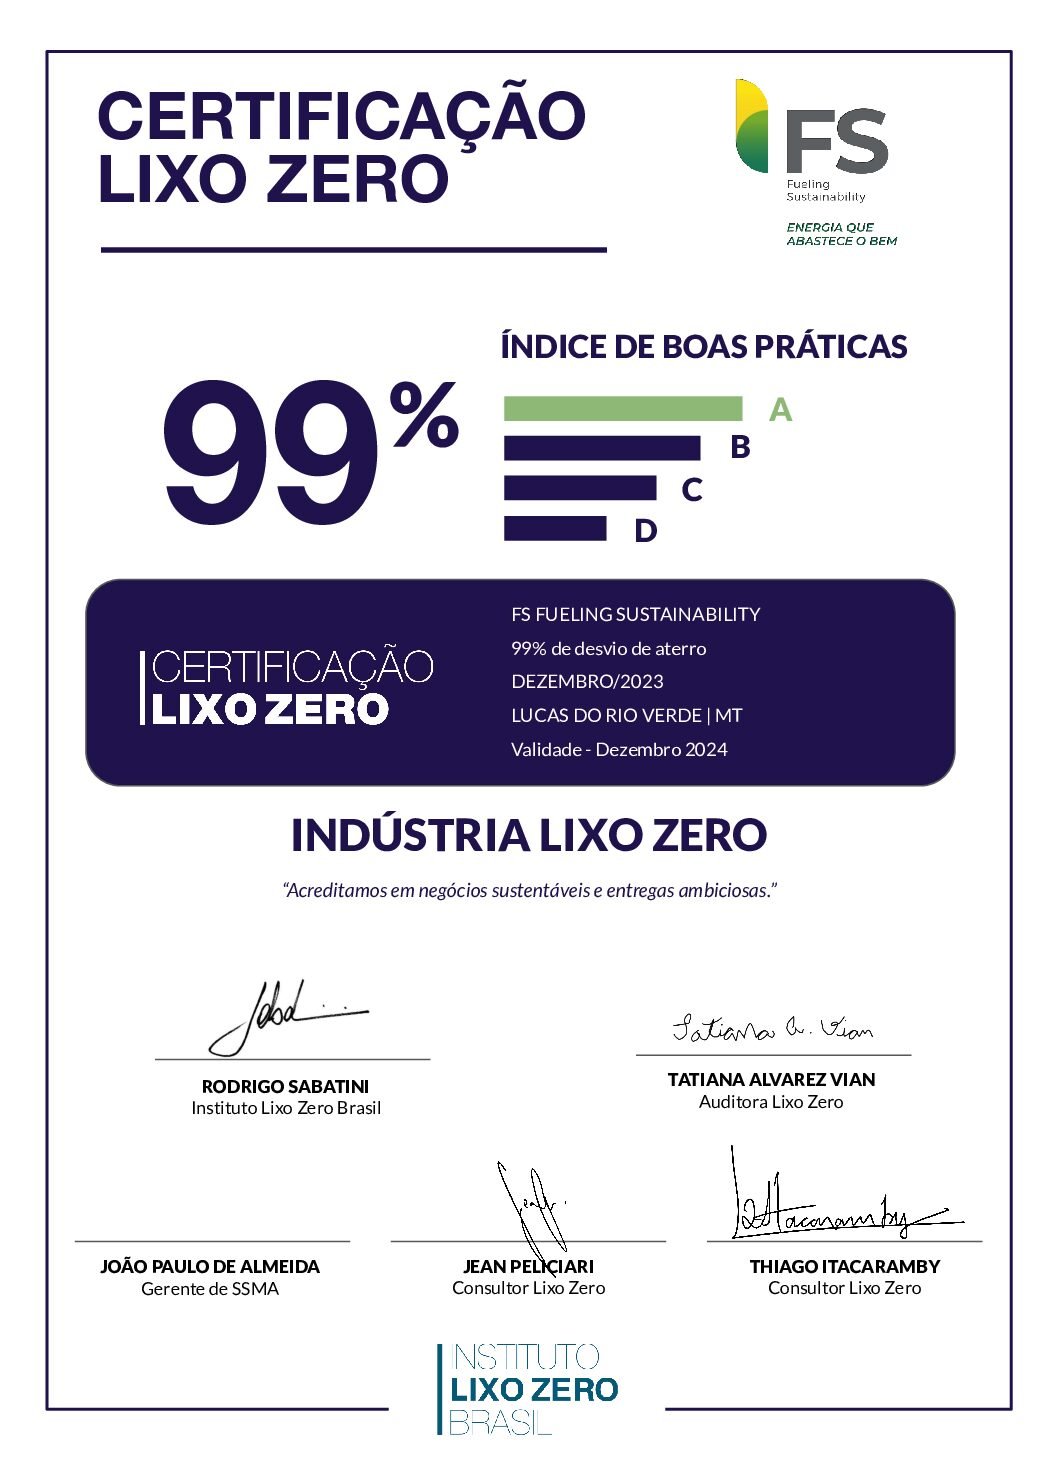 CertificaçãoLixoZero_FS_FUELING SUSTAINABILITY_Lucas_do_Rio_Verde_MT_Dezembro_2023